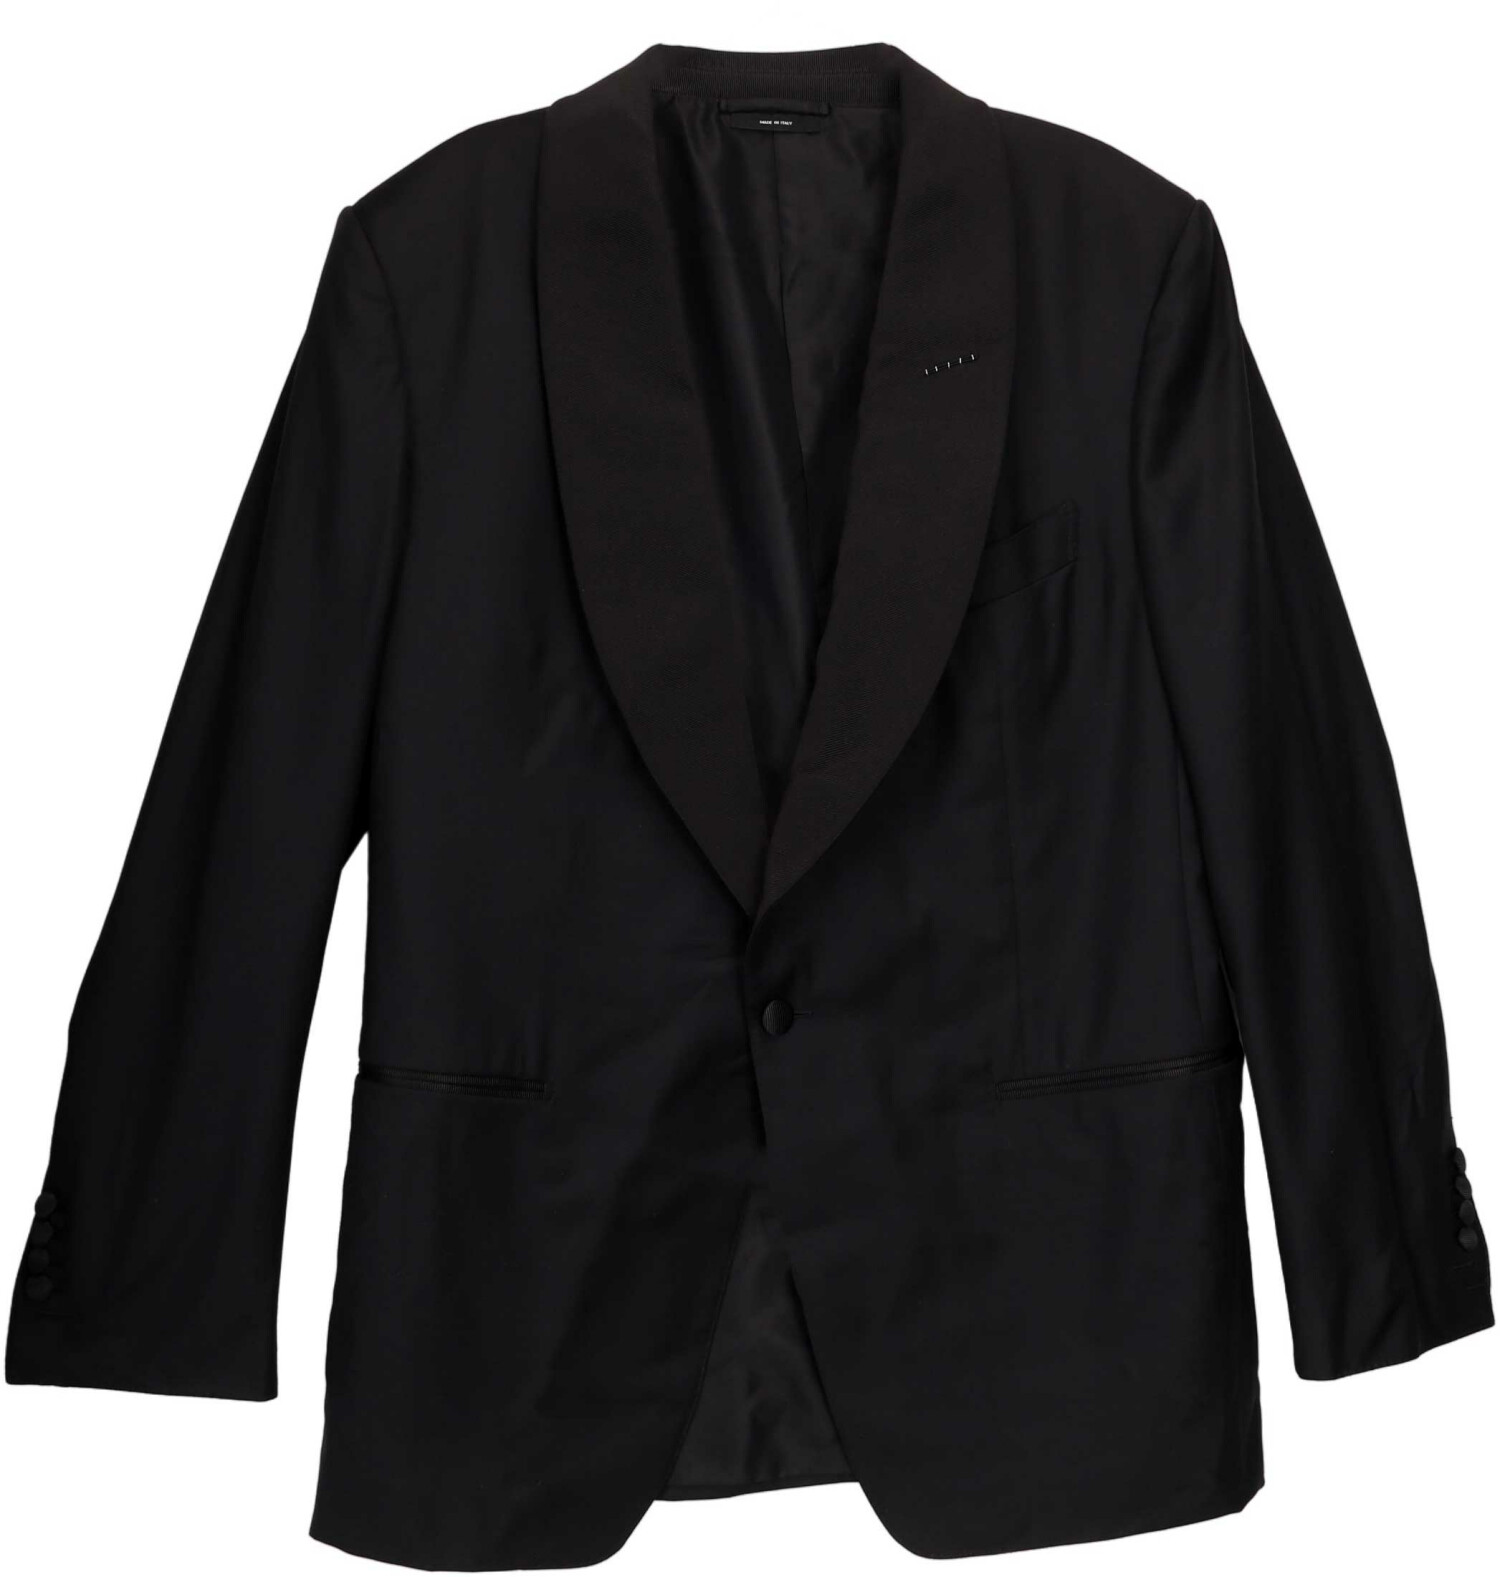 Tom Ford Men's Black Two-Piece Dinner Suit - 44 US / 54 EU - image 1 of 4